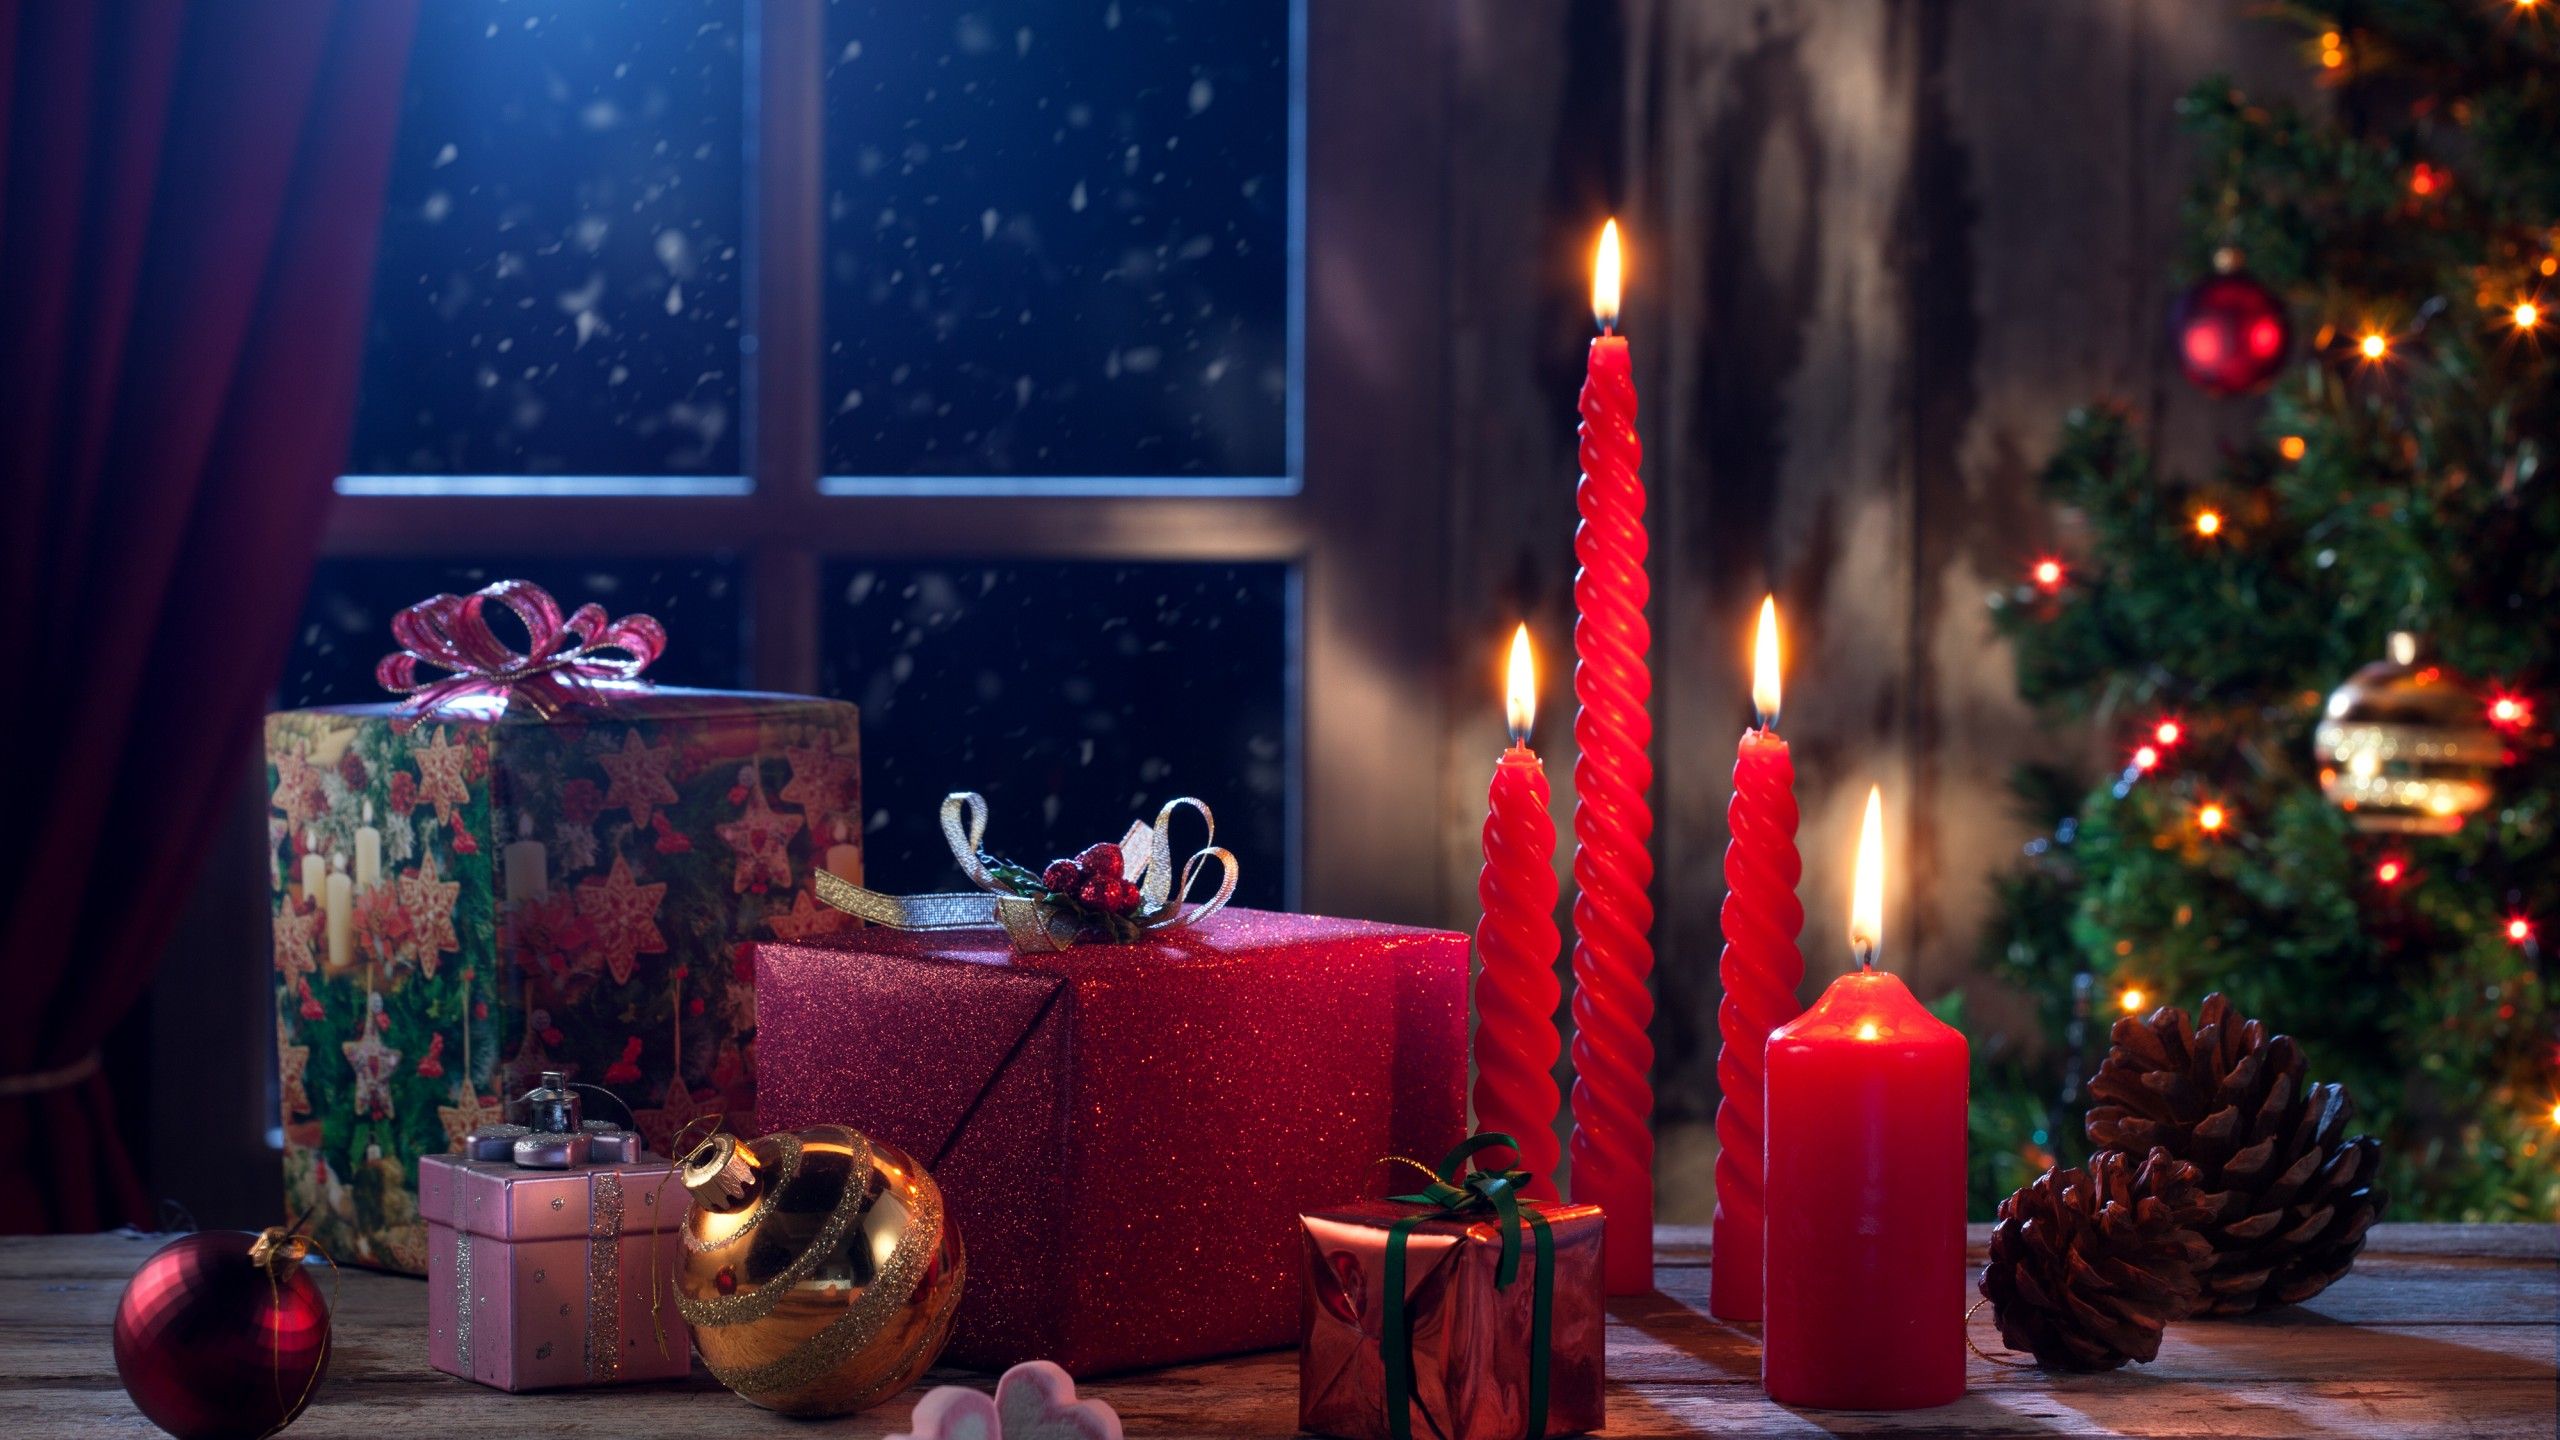 20 Beautiful Christmas HD Desktop Wallpapers 2560x1440 High Quality